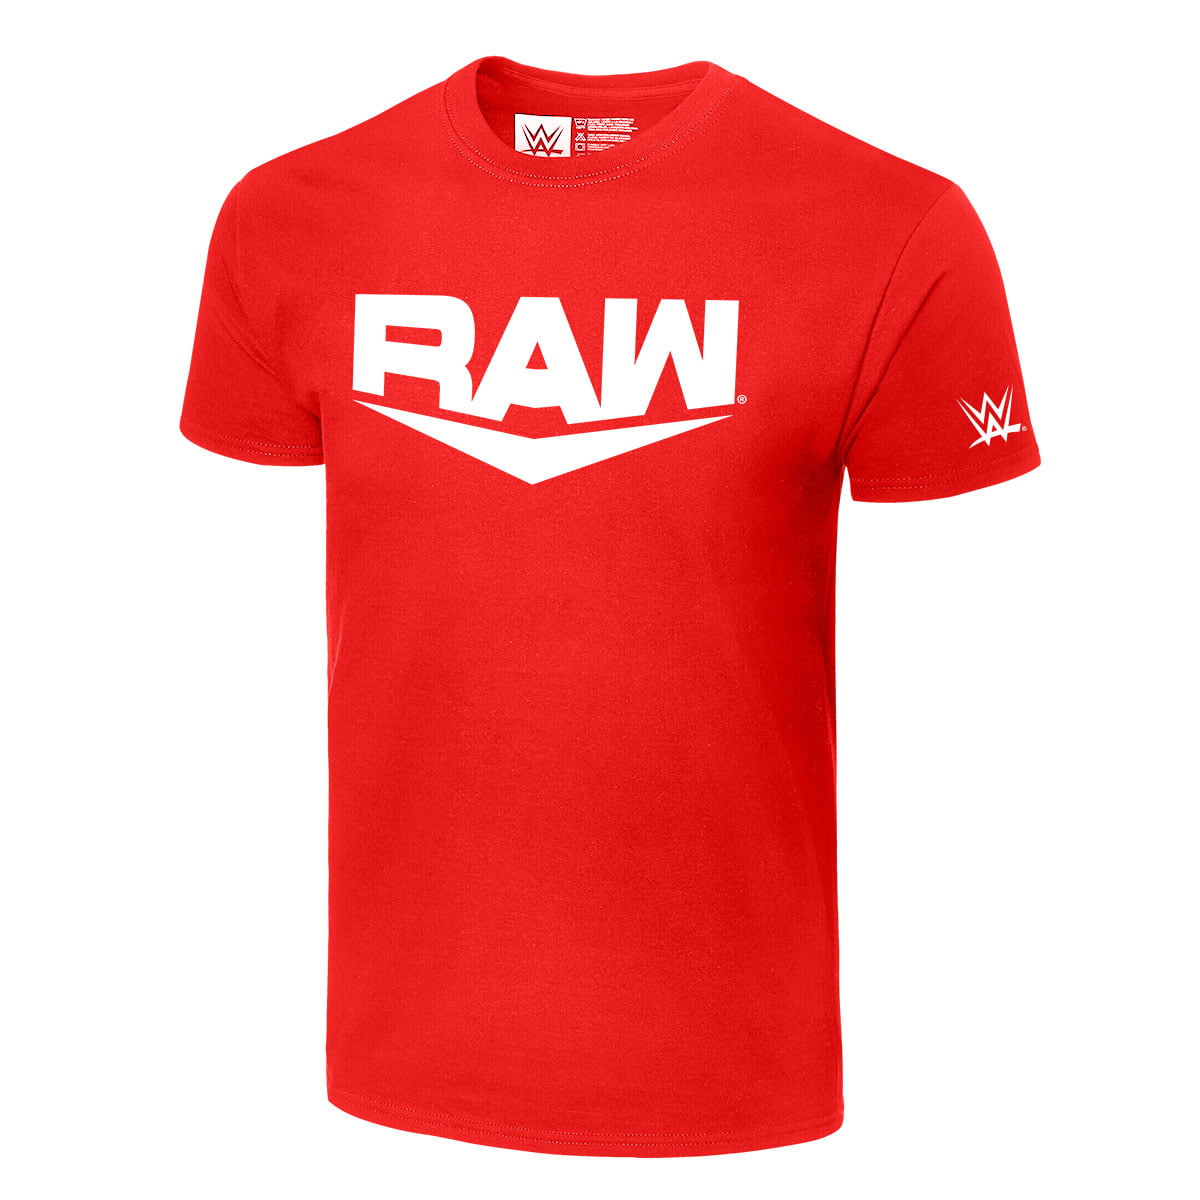 red raw shirt